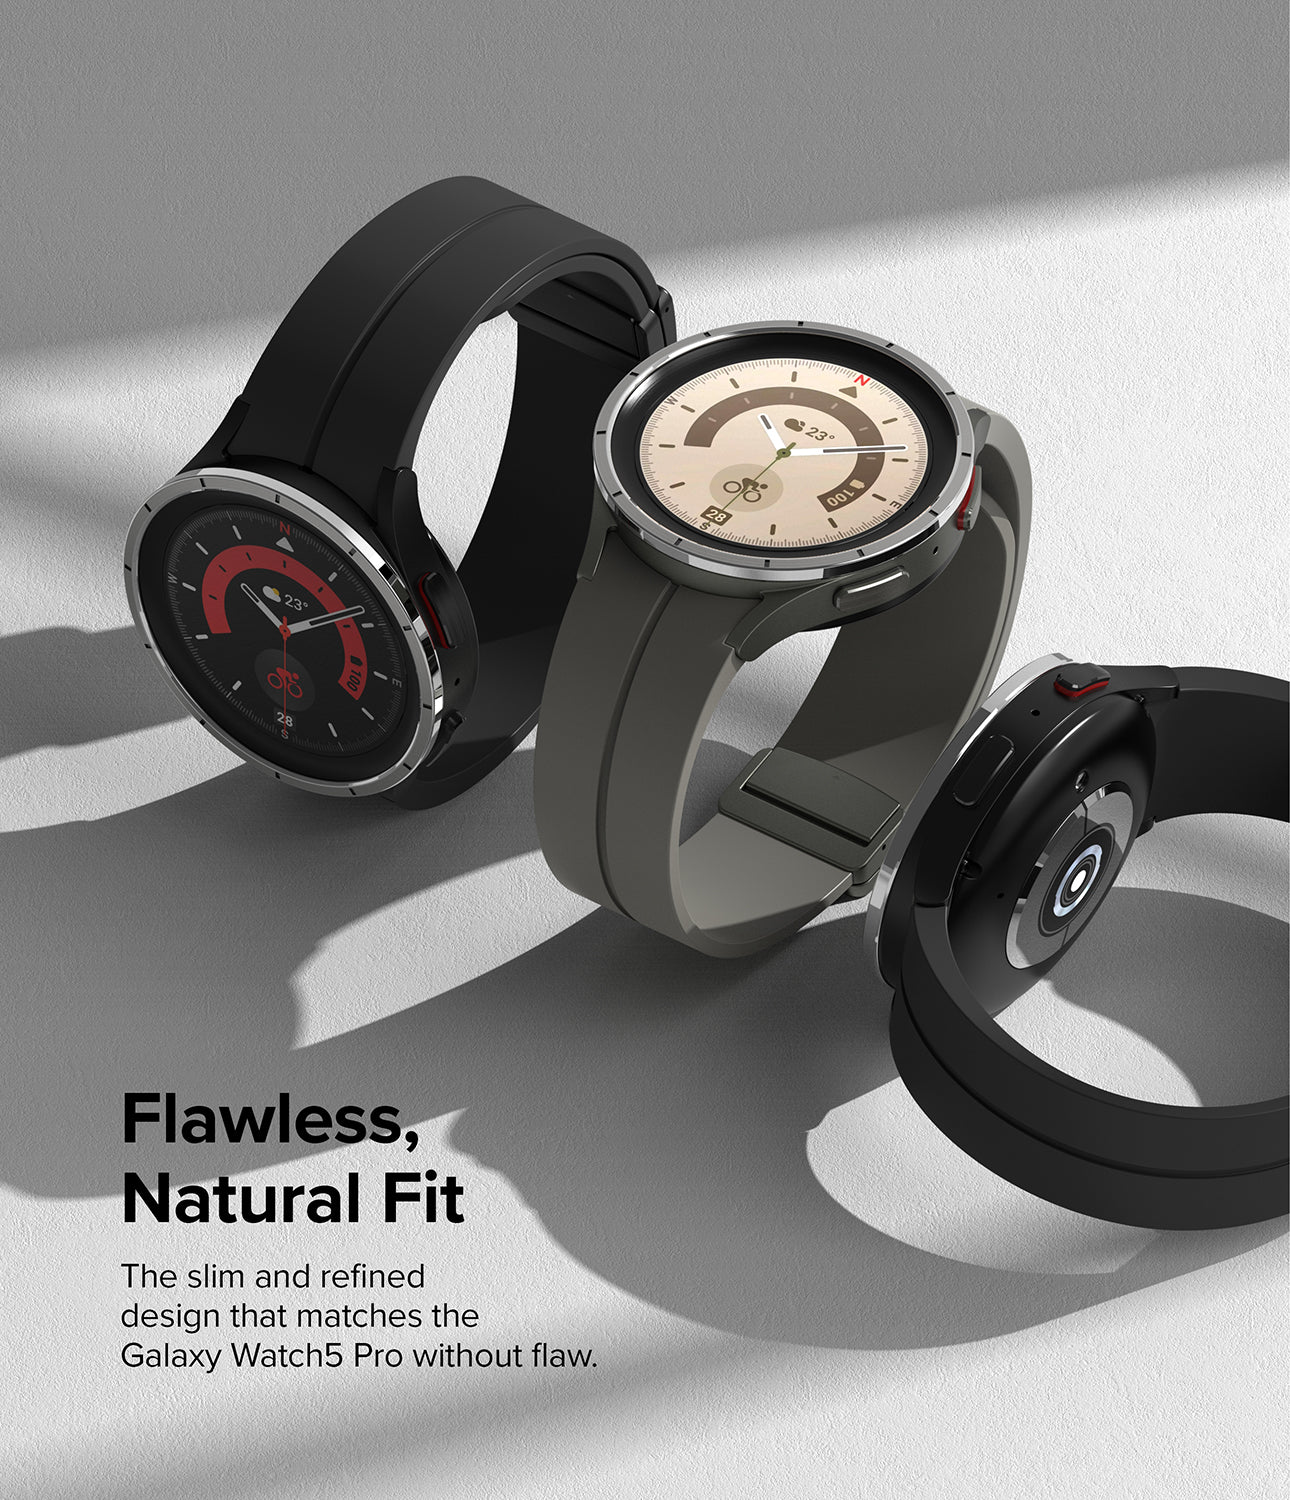 Galaxy Watch 5 Pro 45mm | Bezel Styling 45-32